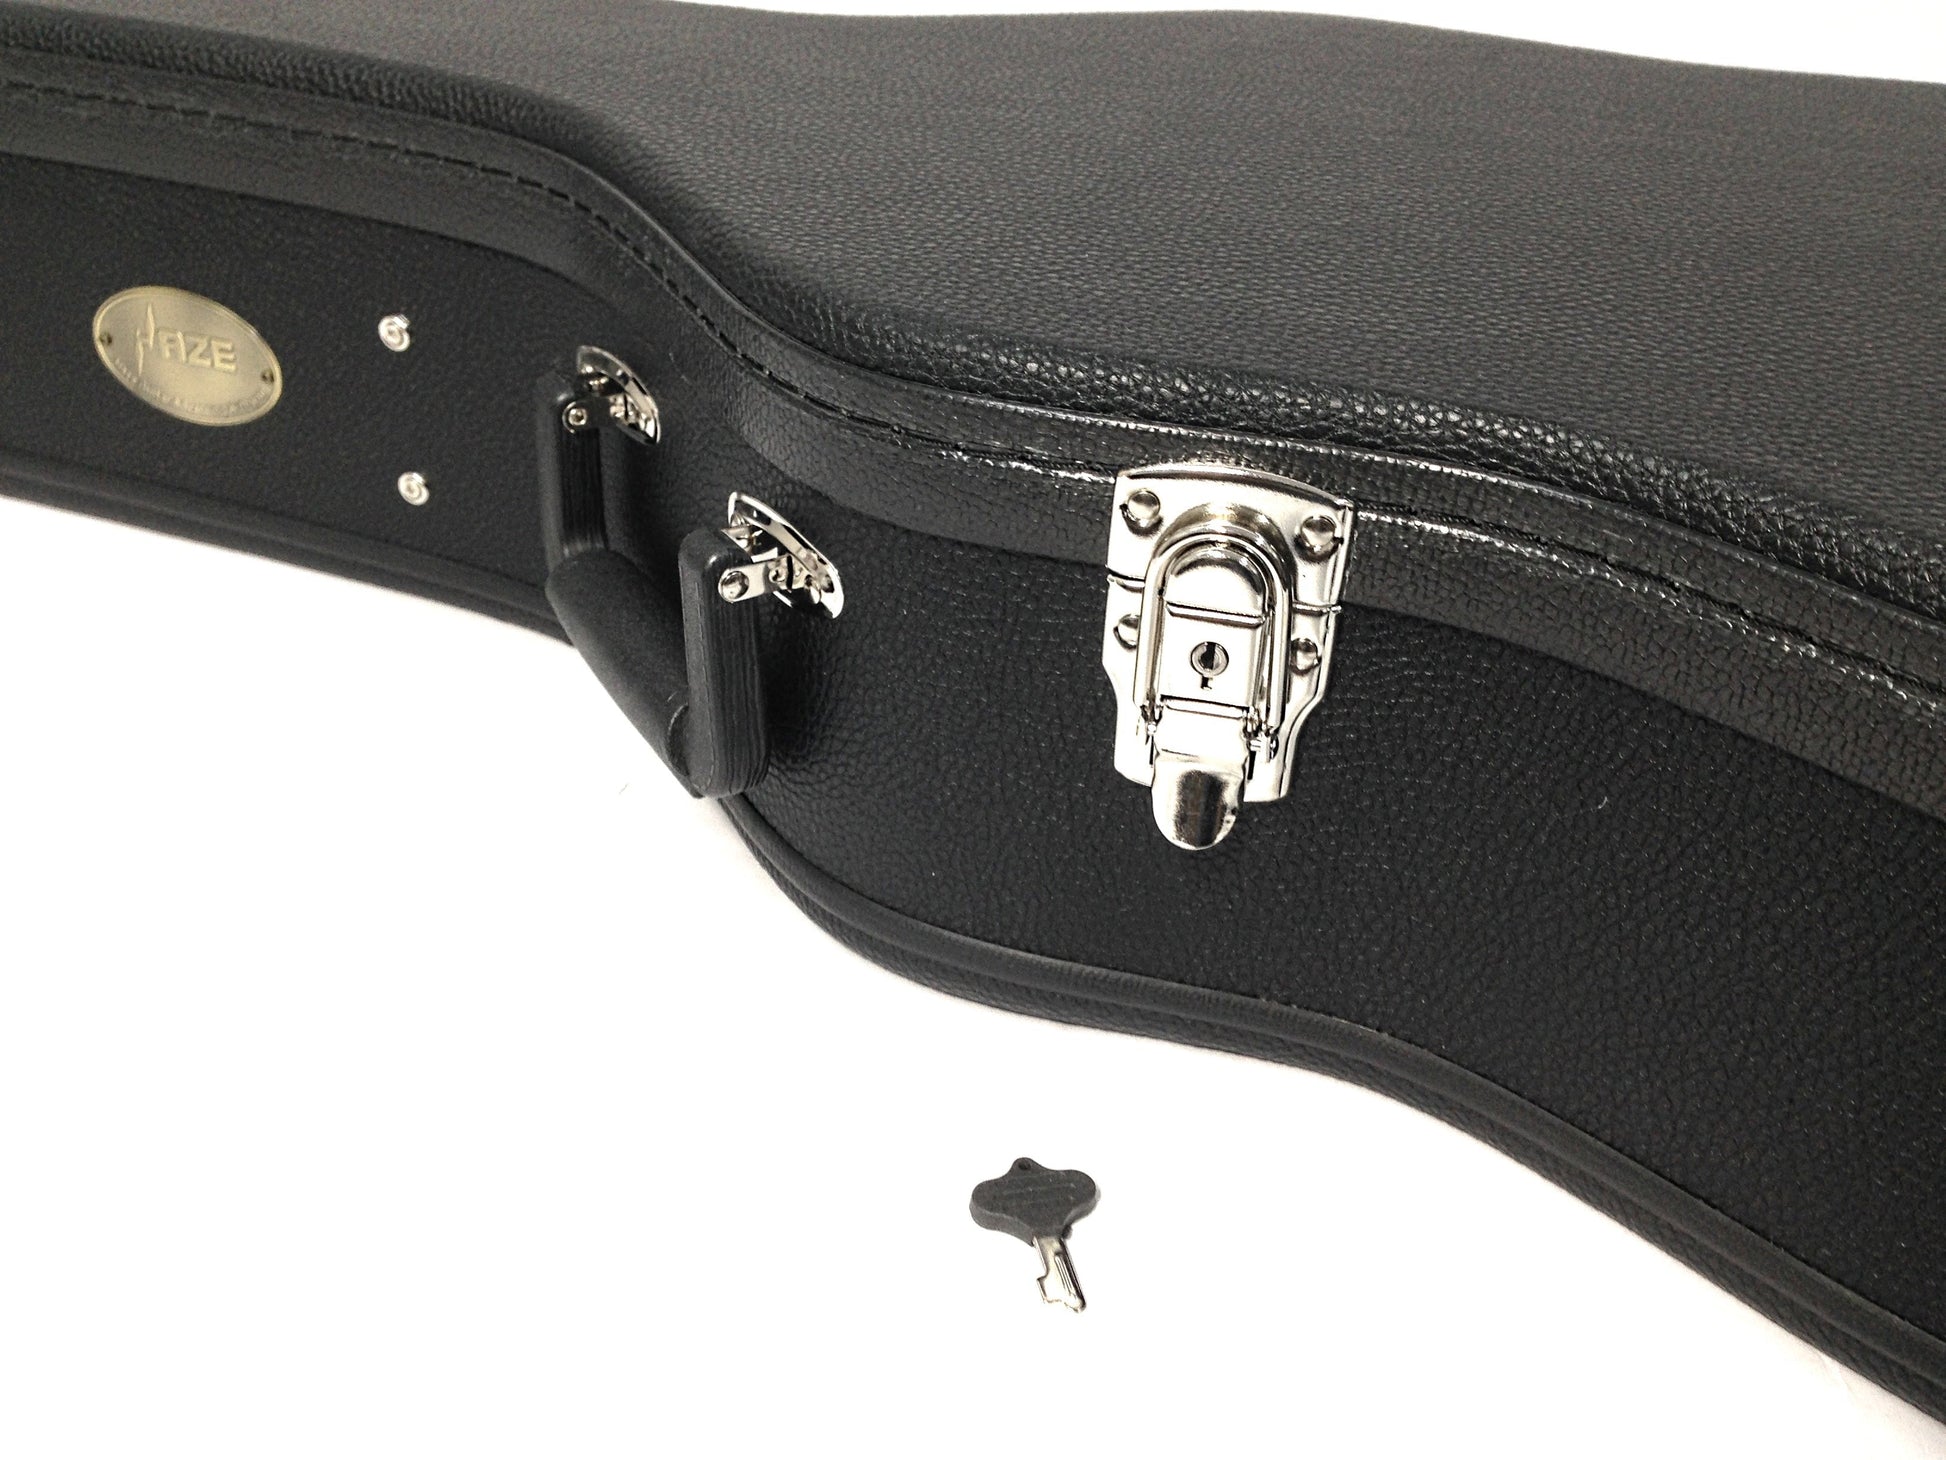 HPAA19020CA Durable Hard Case for Classical Guitar Lockable w/Key, Black